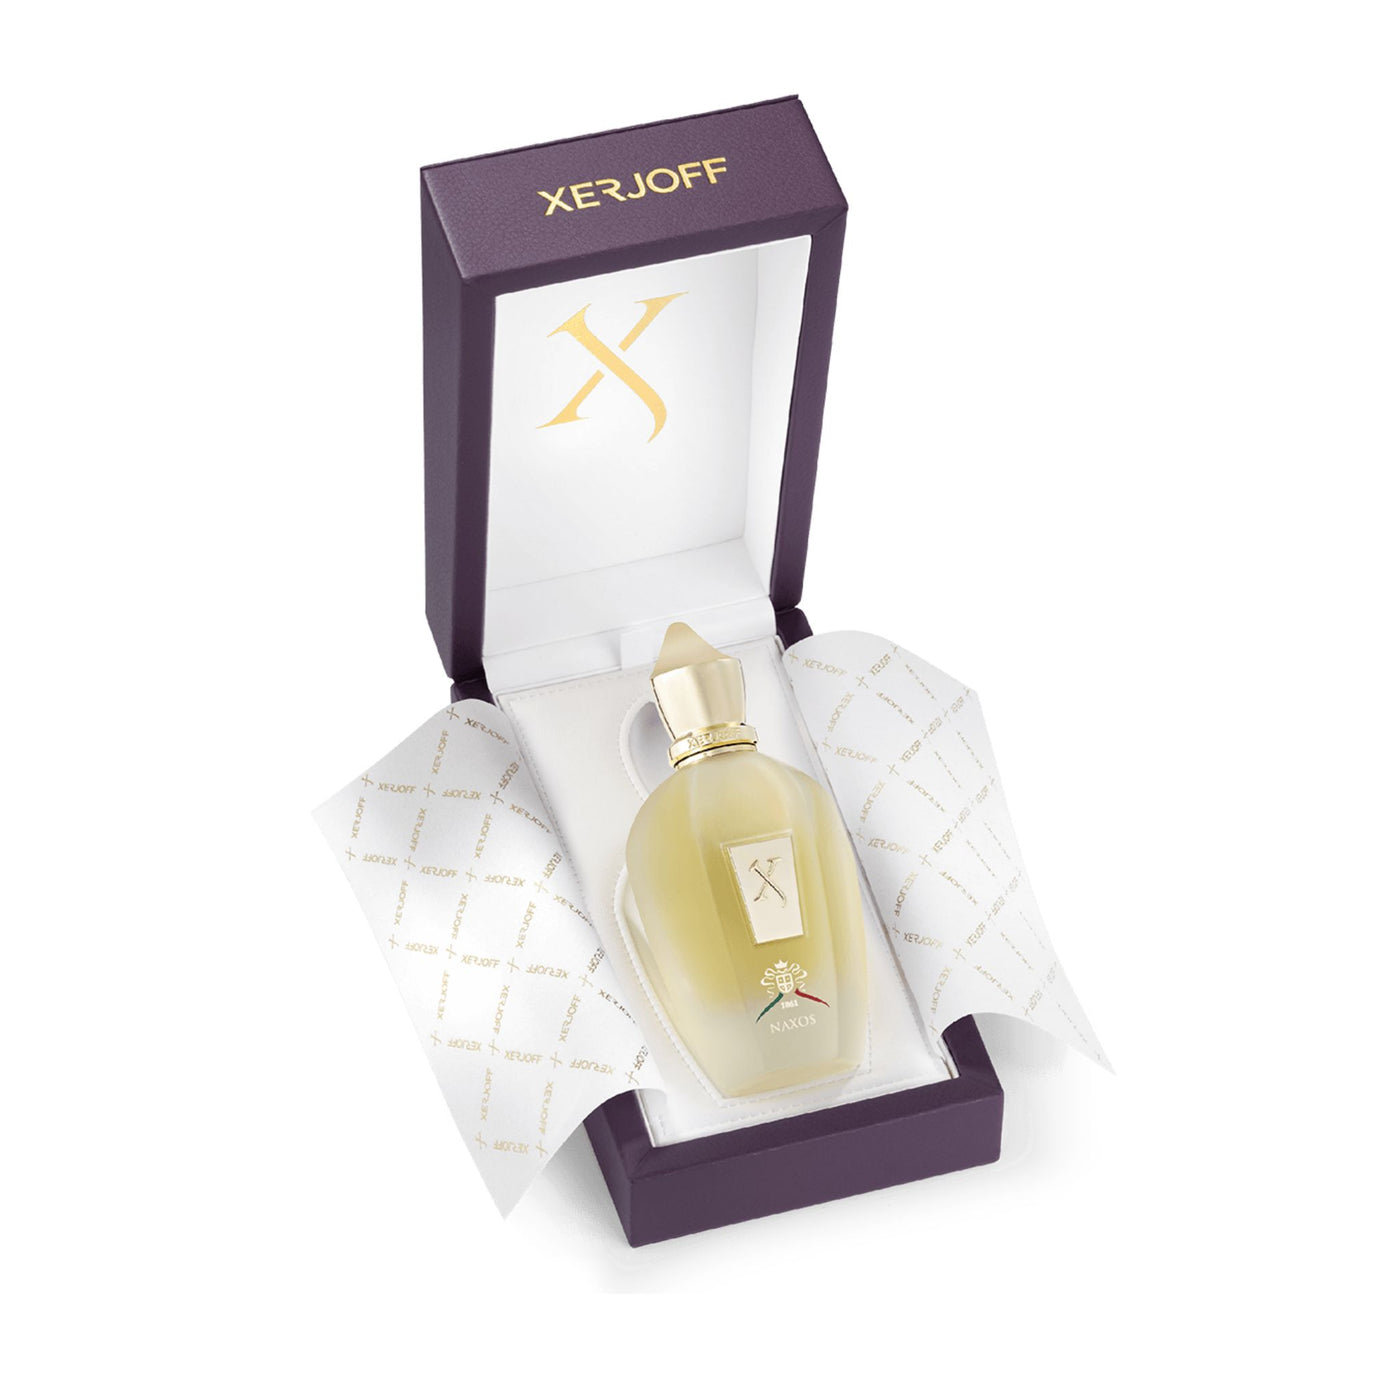 XJ 1861 Naxos Xerjoff Perfume